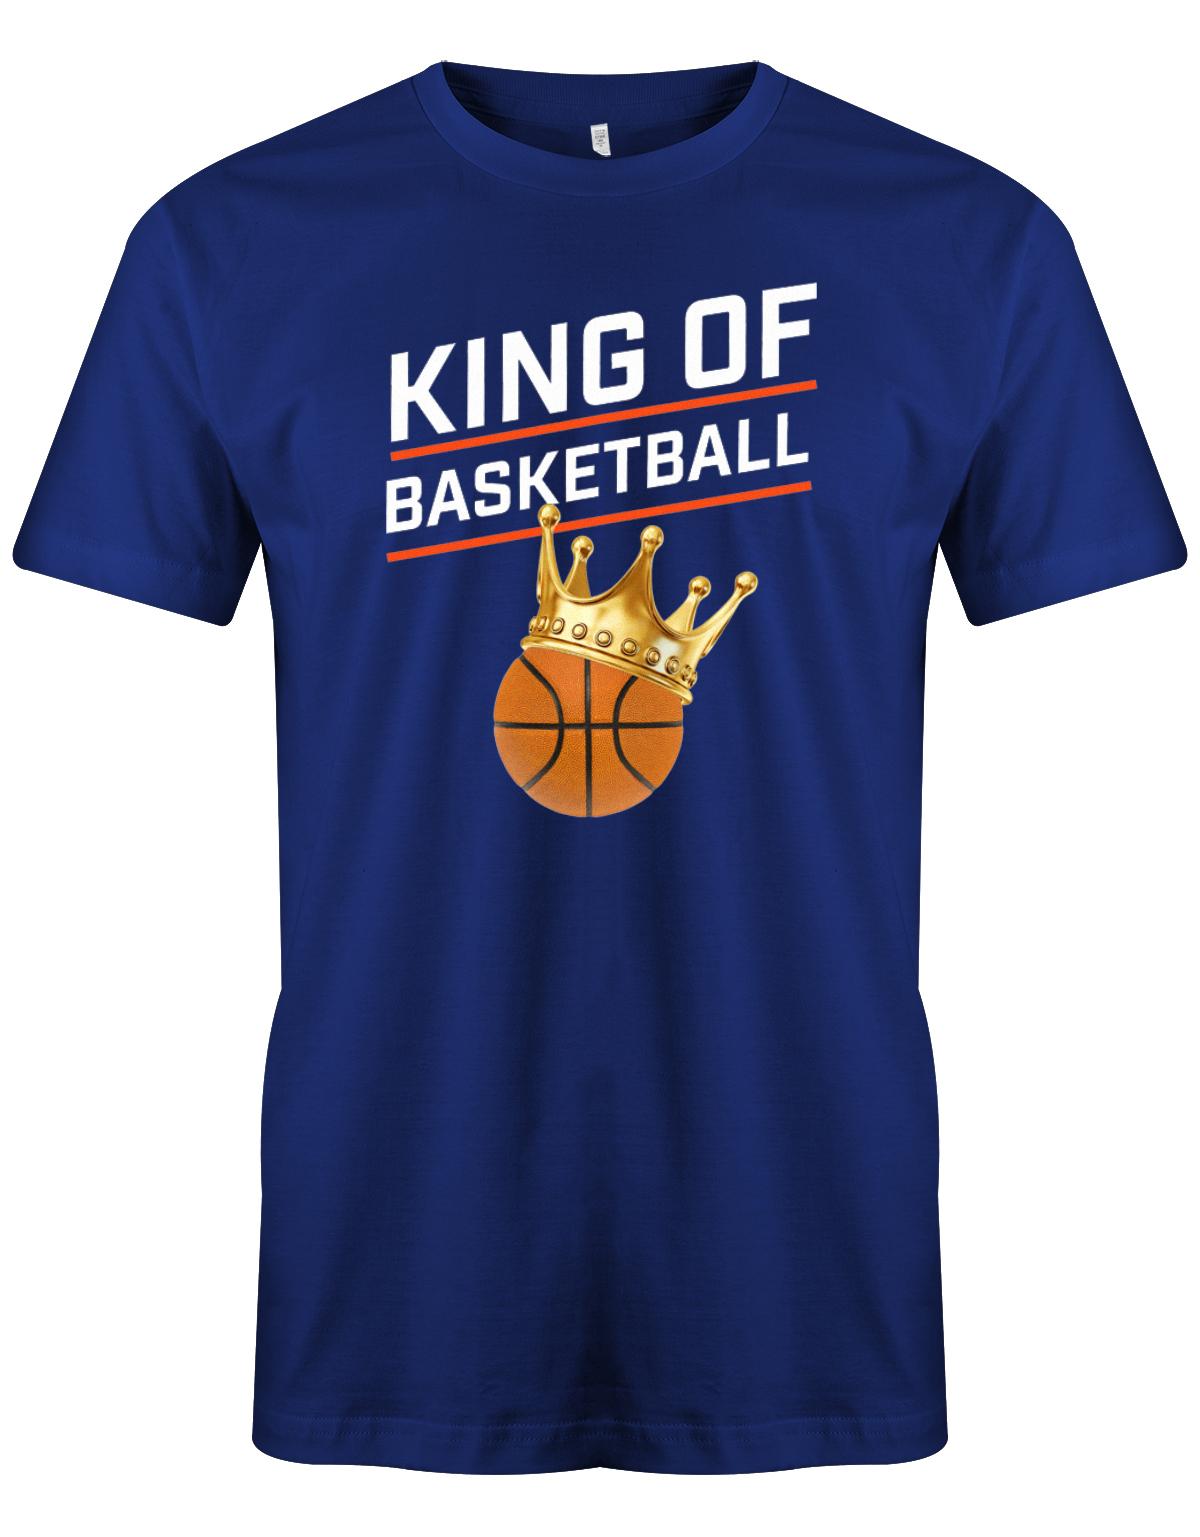 King-Of-Basketball-Herren-Shirt-Royalblau